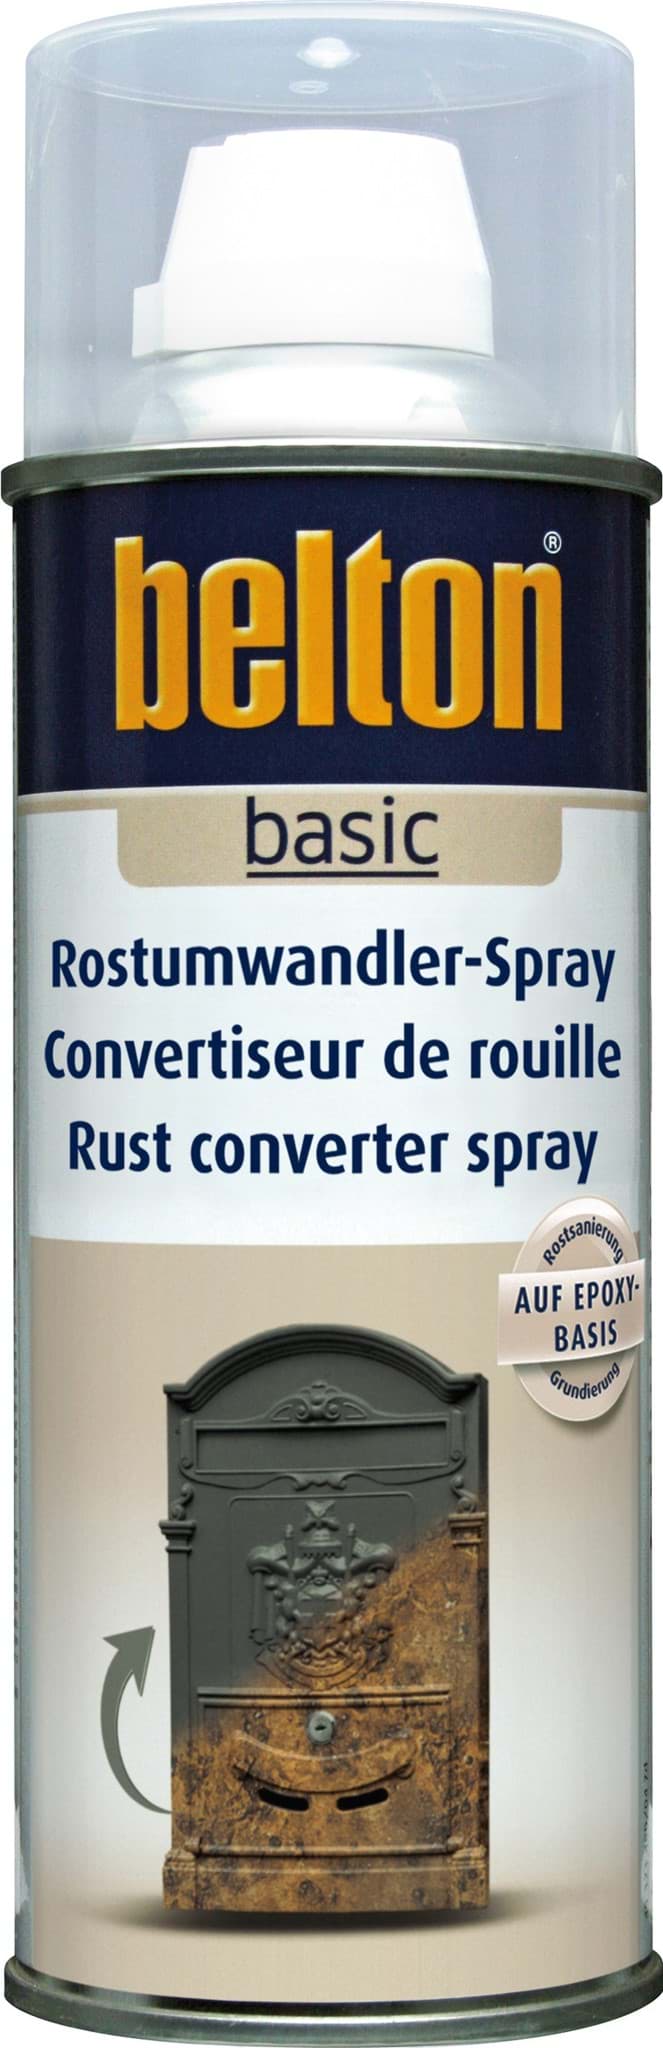 Afbeelding van Belton basic Rostumwandler - Spray